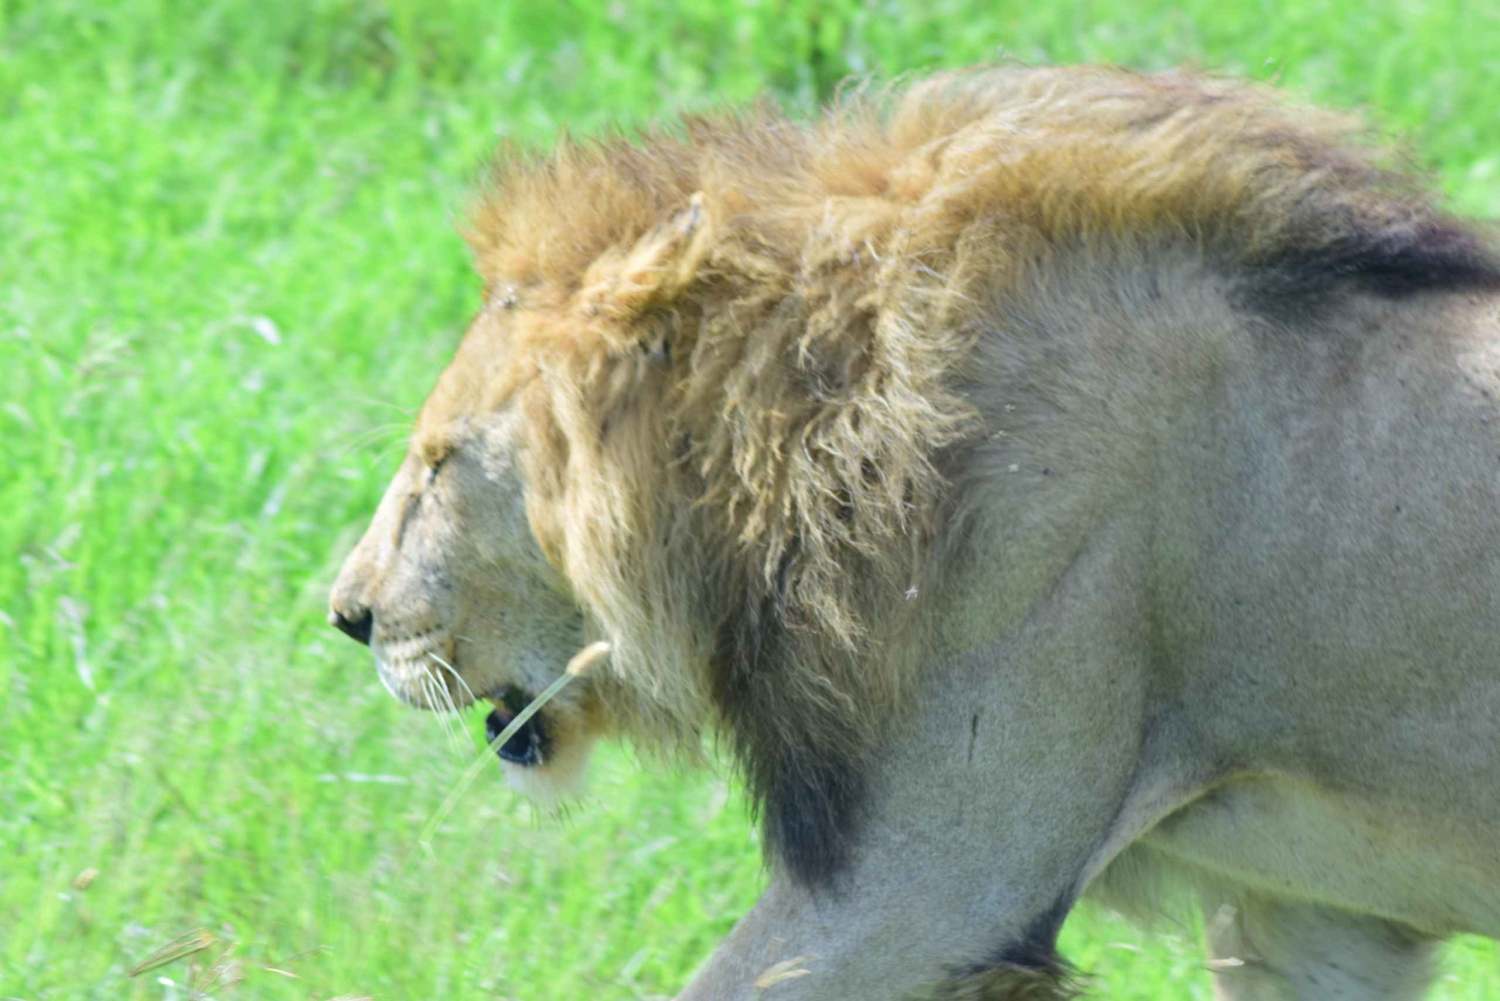 1 daagse safari in Tanzania naar de Ngorongorokrater